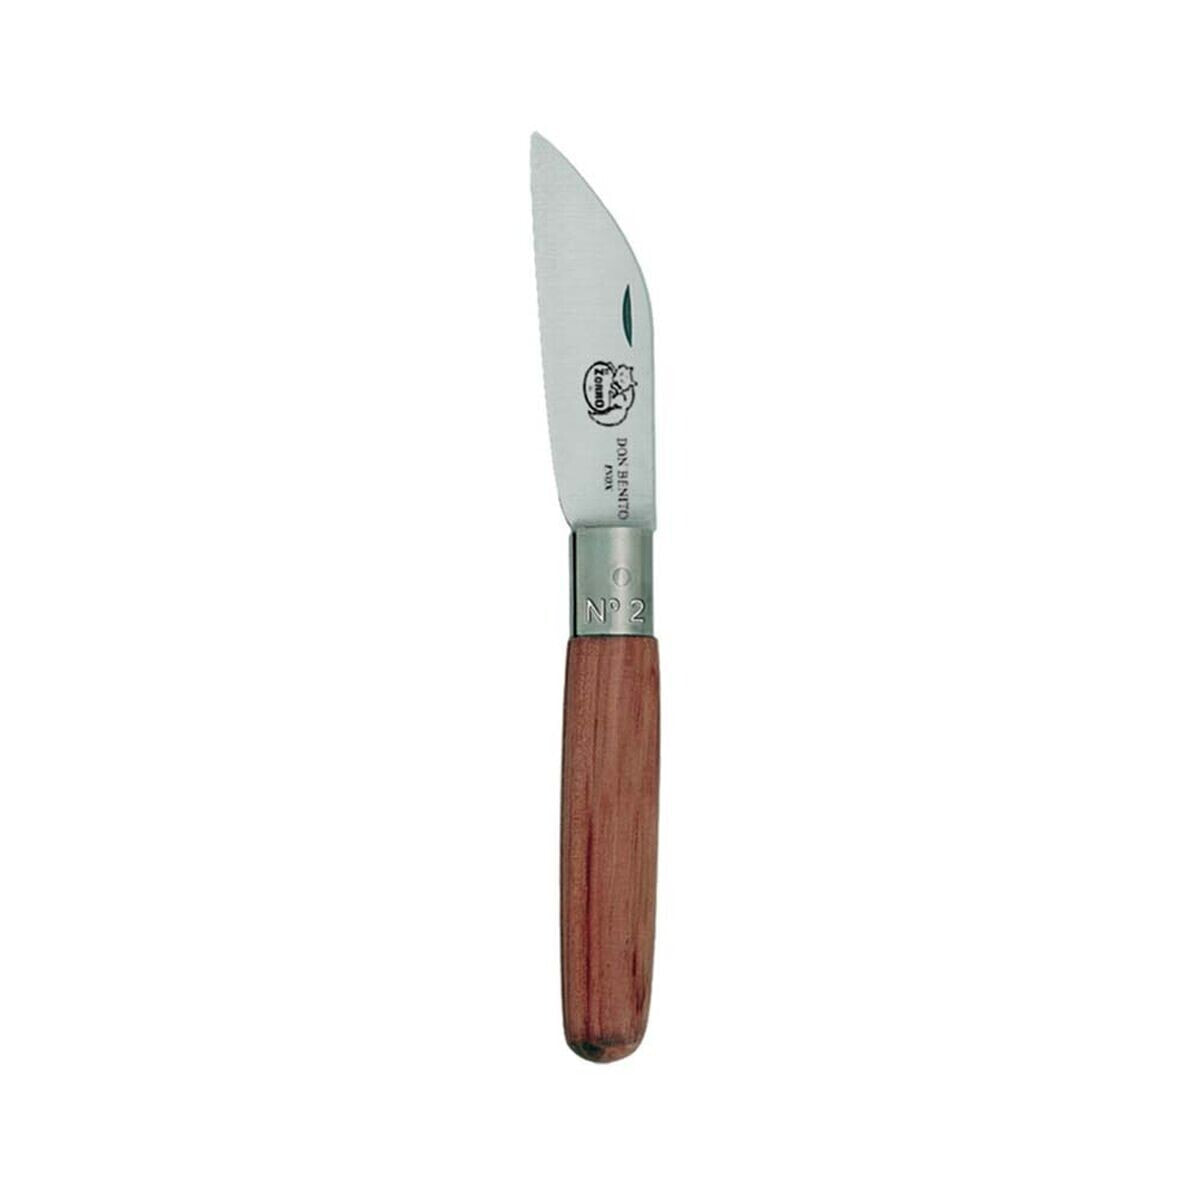 Pocketknife Imex el Zorro Nº2 Upright Stainless steel 4 cm